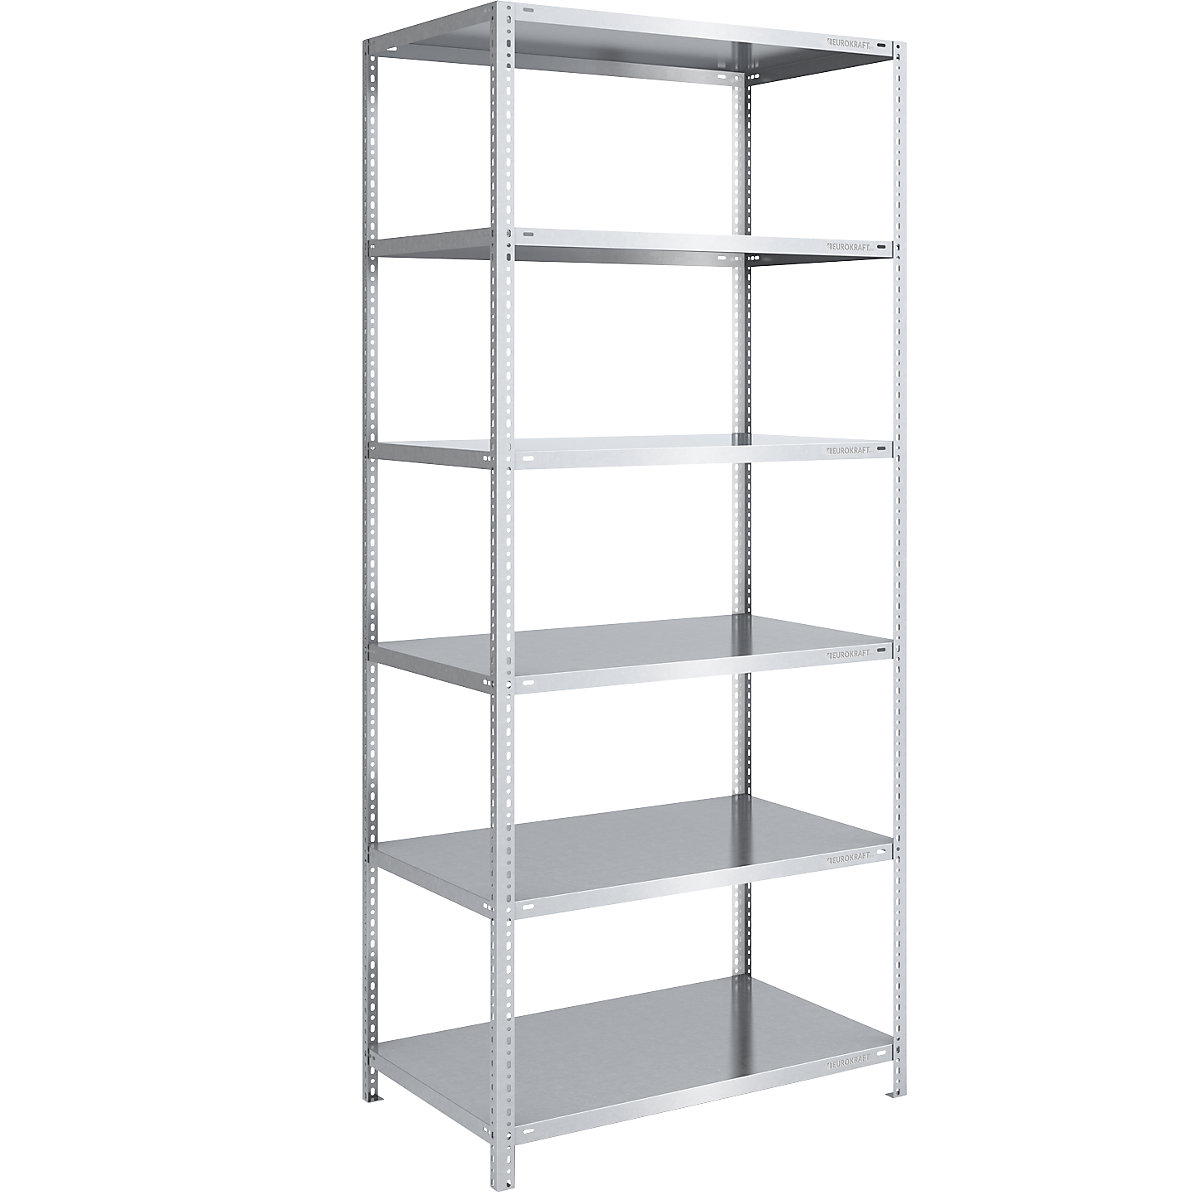 Bolt-together shelf unit, light duty, zinc plated – eurokraft pro, shelf unit height 2500 mm, shelf width 1000 mm, depth 800 mm, standard shelf unit-13